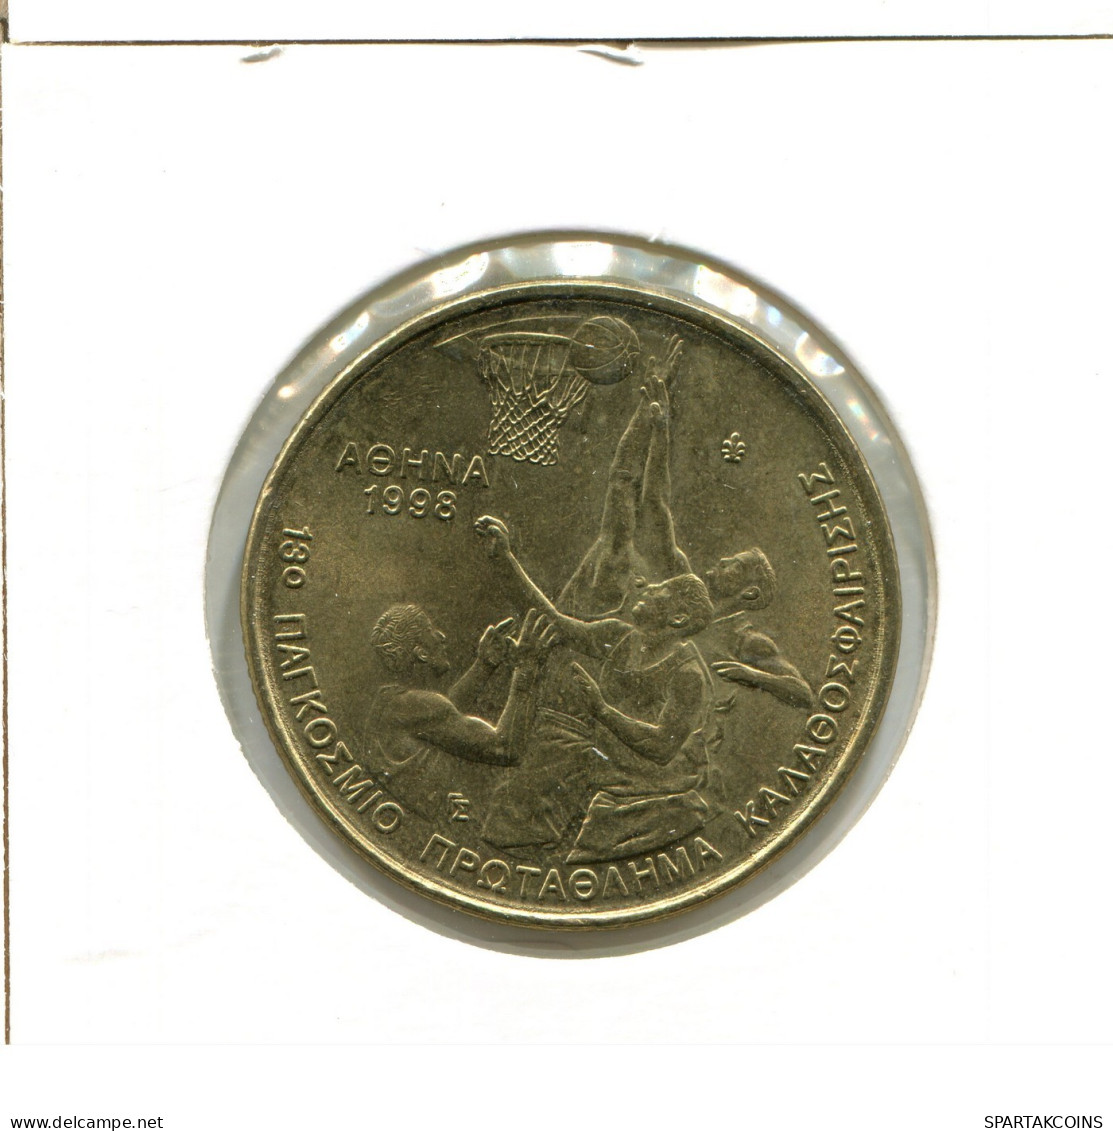 100 DRACHMES 1998 GREECE Coin #AX660.U.A - Griechenland